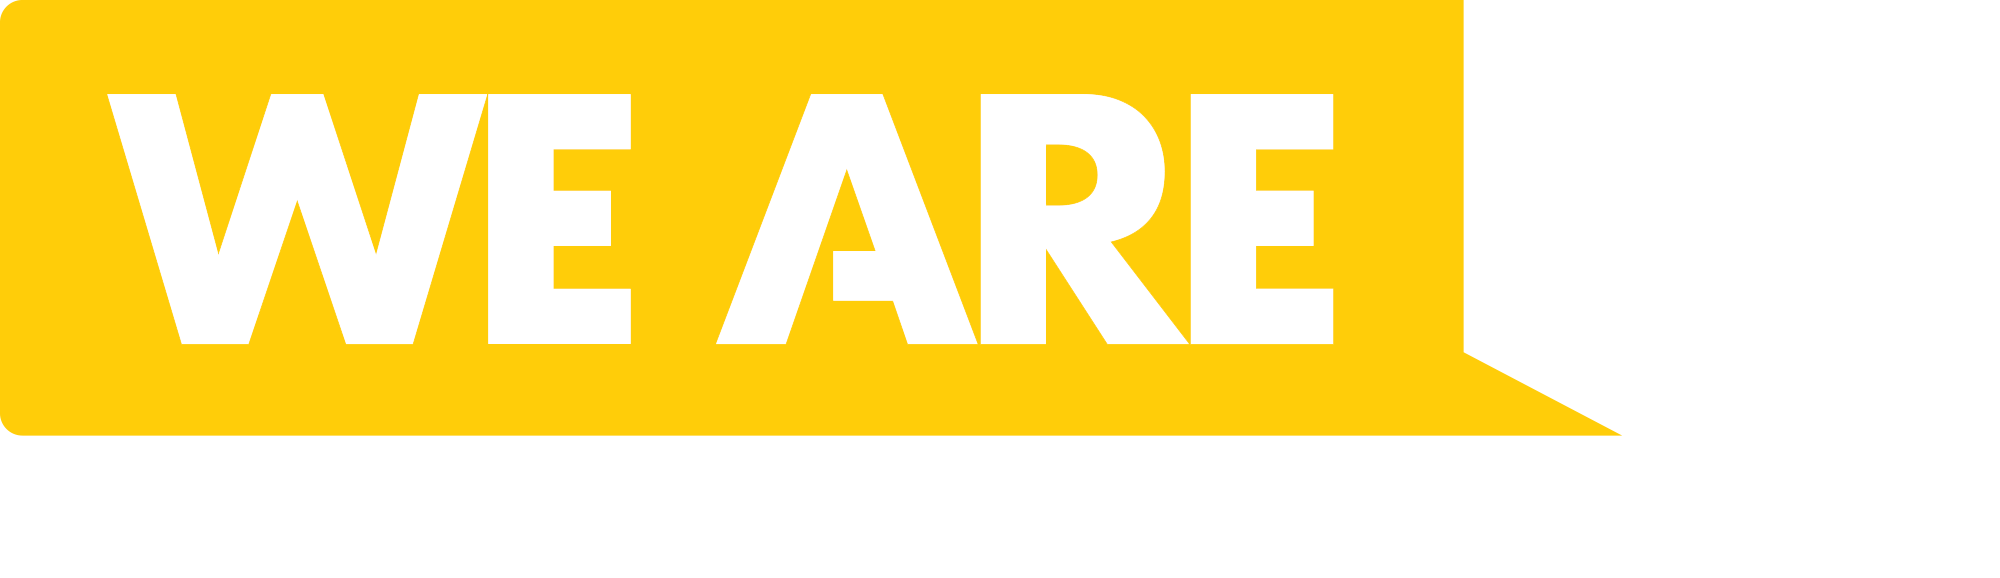 The Campaign for Cal State LA